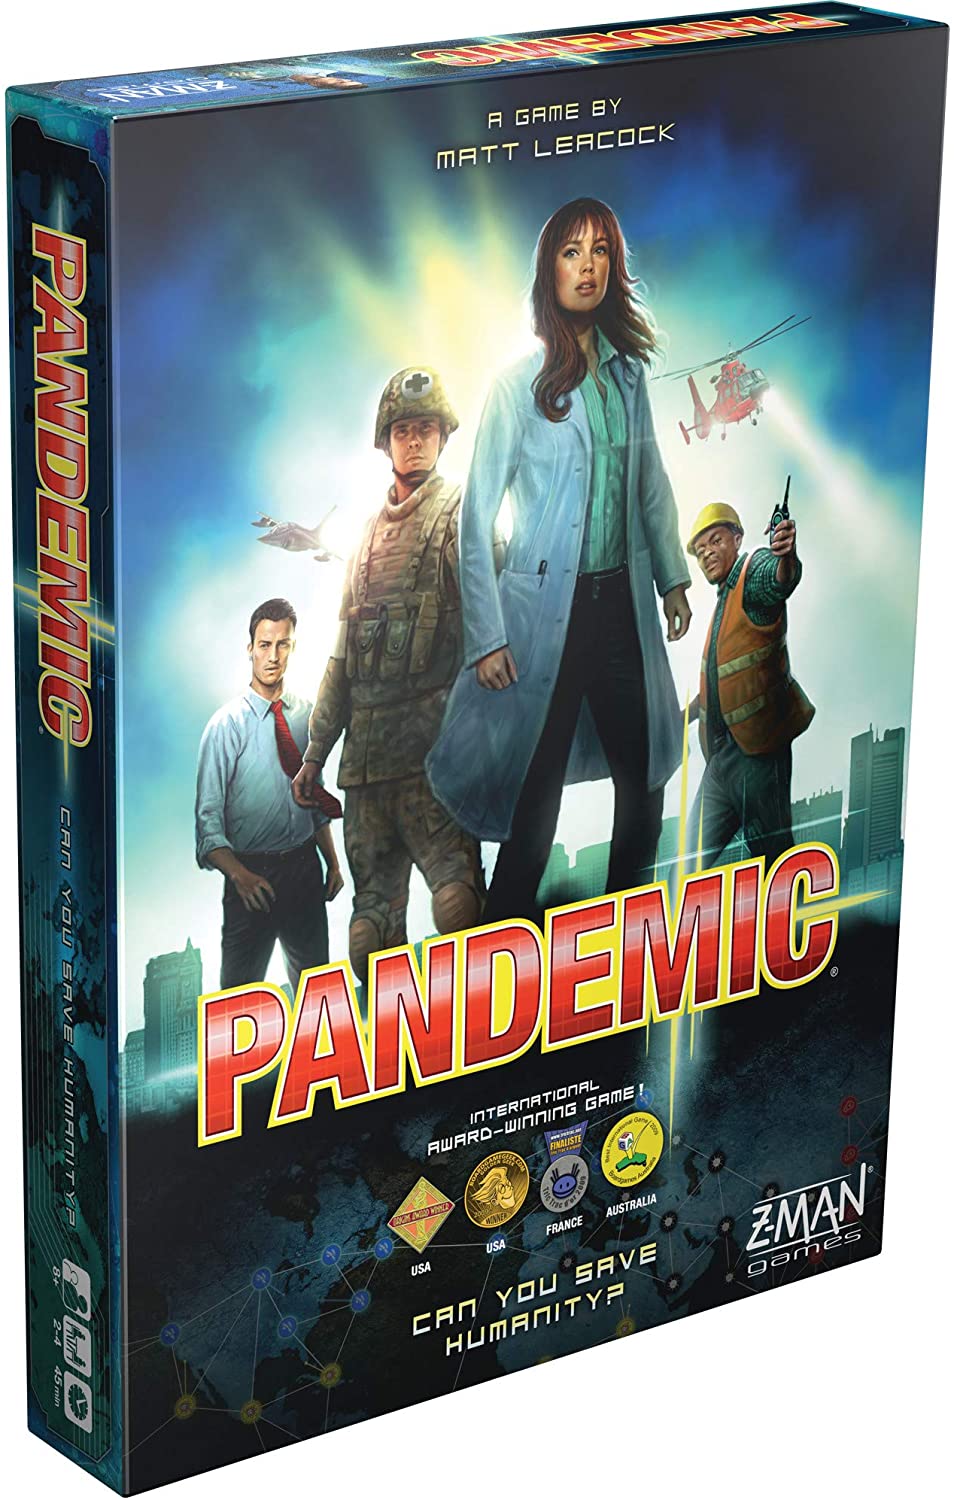 Amazon - Pandemic Board Game (Base Game) - Z-man games $19